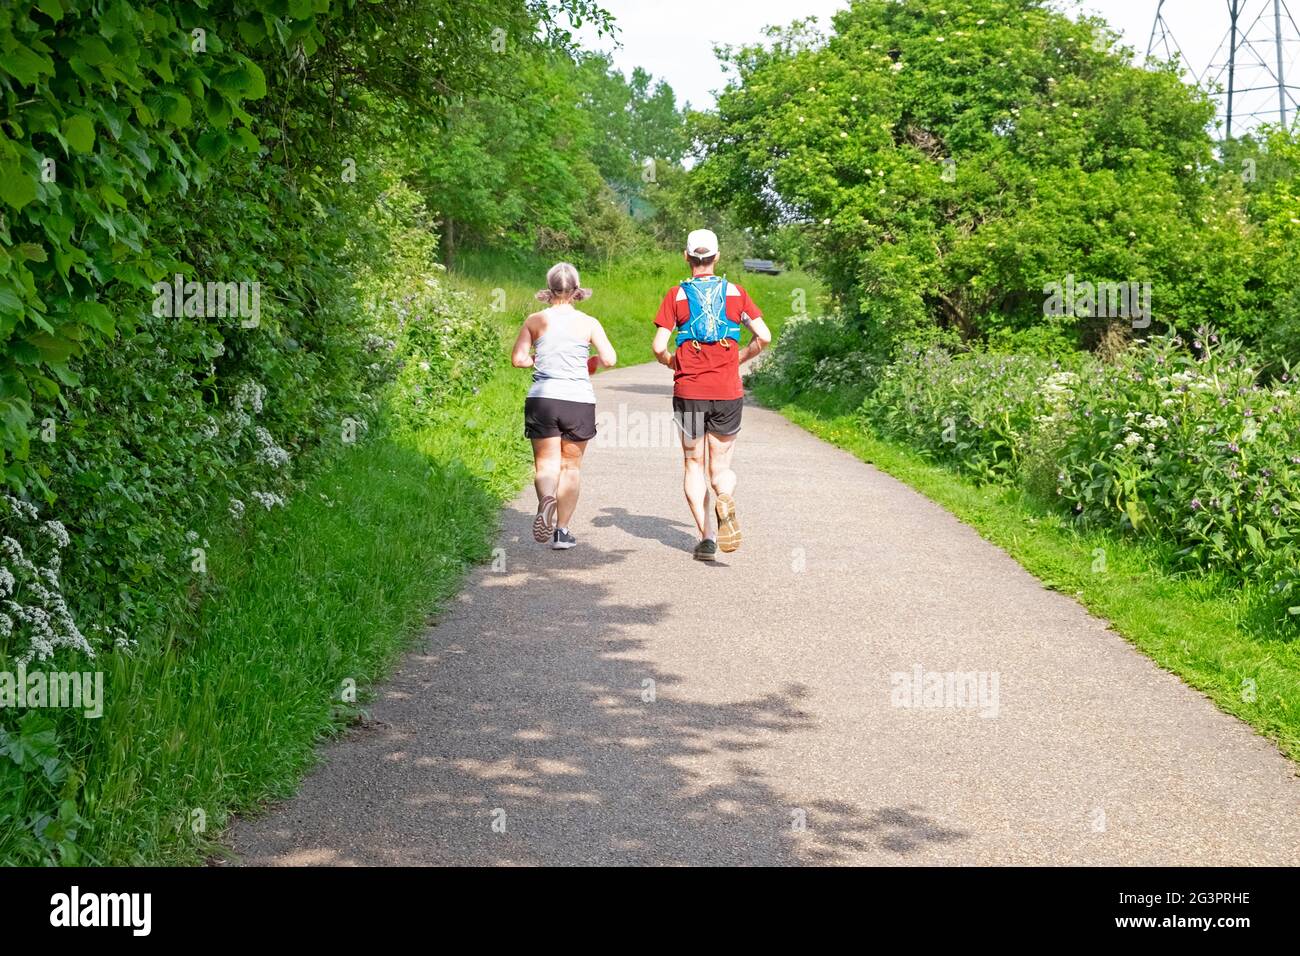 Zwei ältere Menschen Paar Rückansicht Läufer Joggen auf dem Walthamstow Wetlands Path im Frühling 2021 London N17 UK KATHY DEWITT Stockfoto